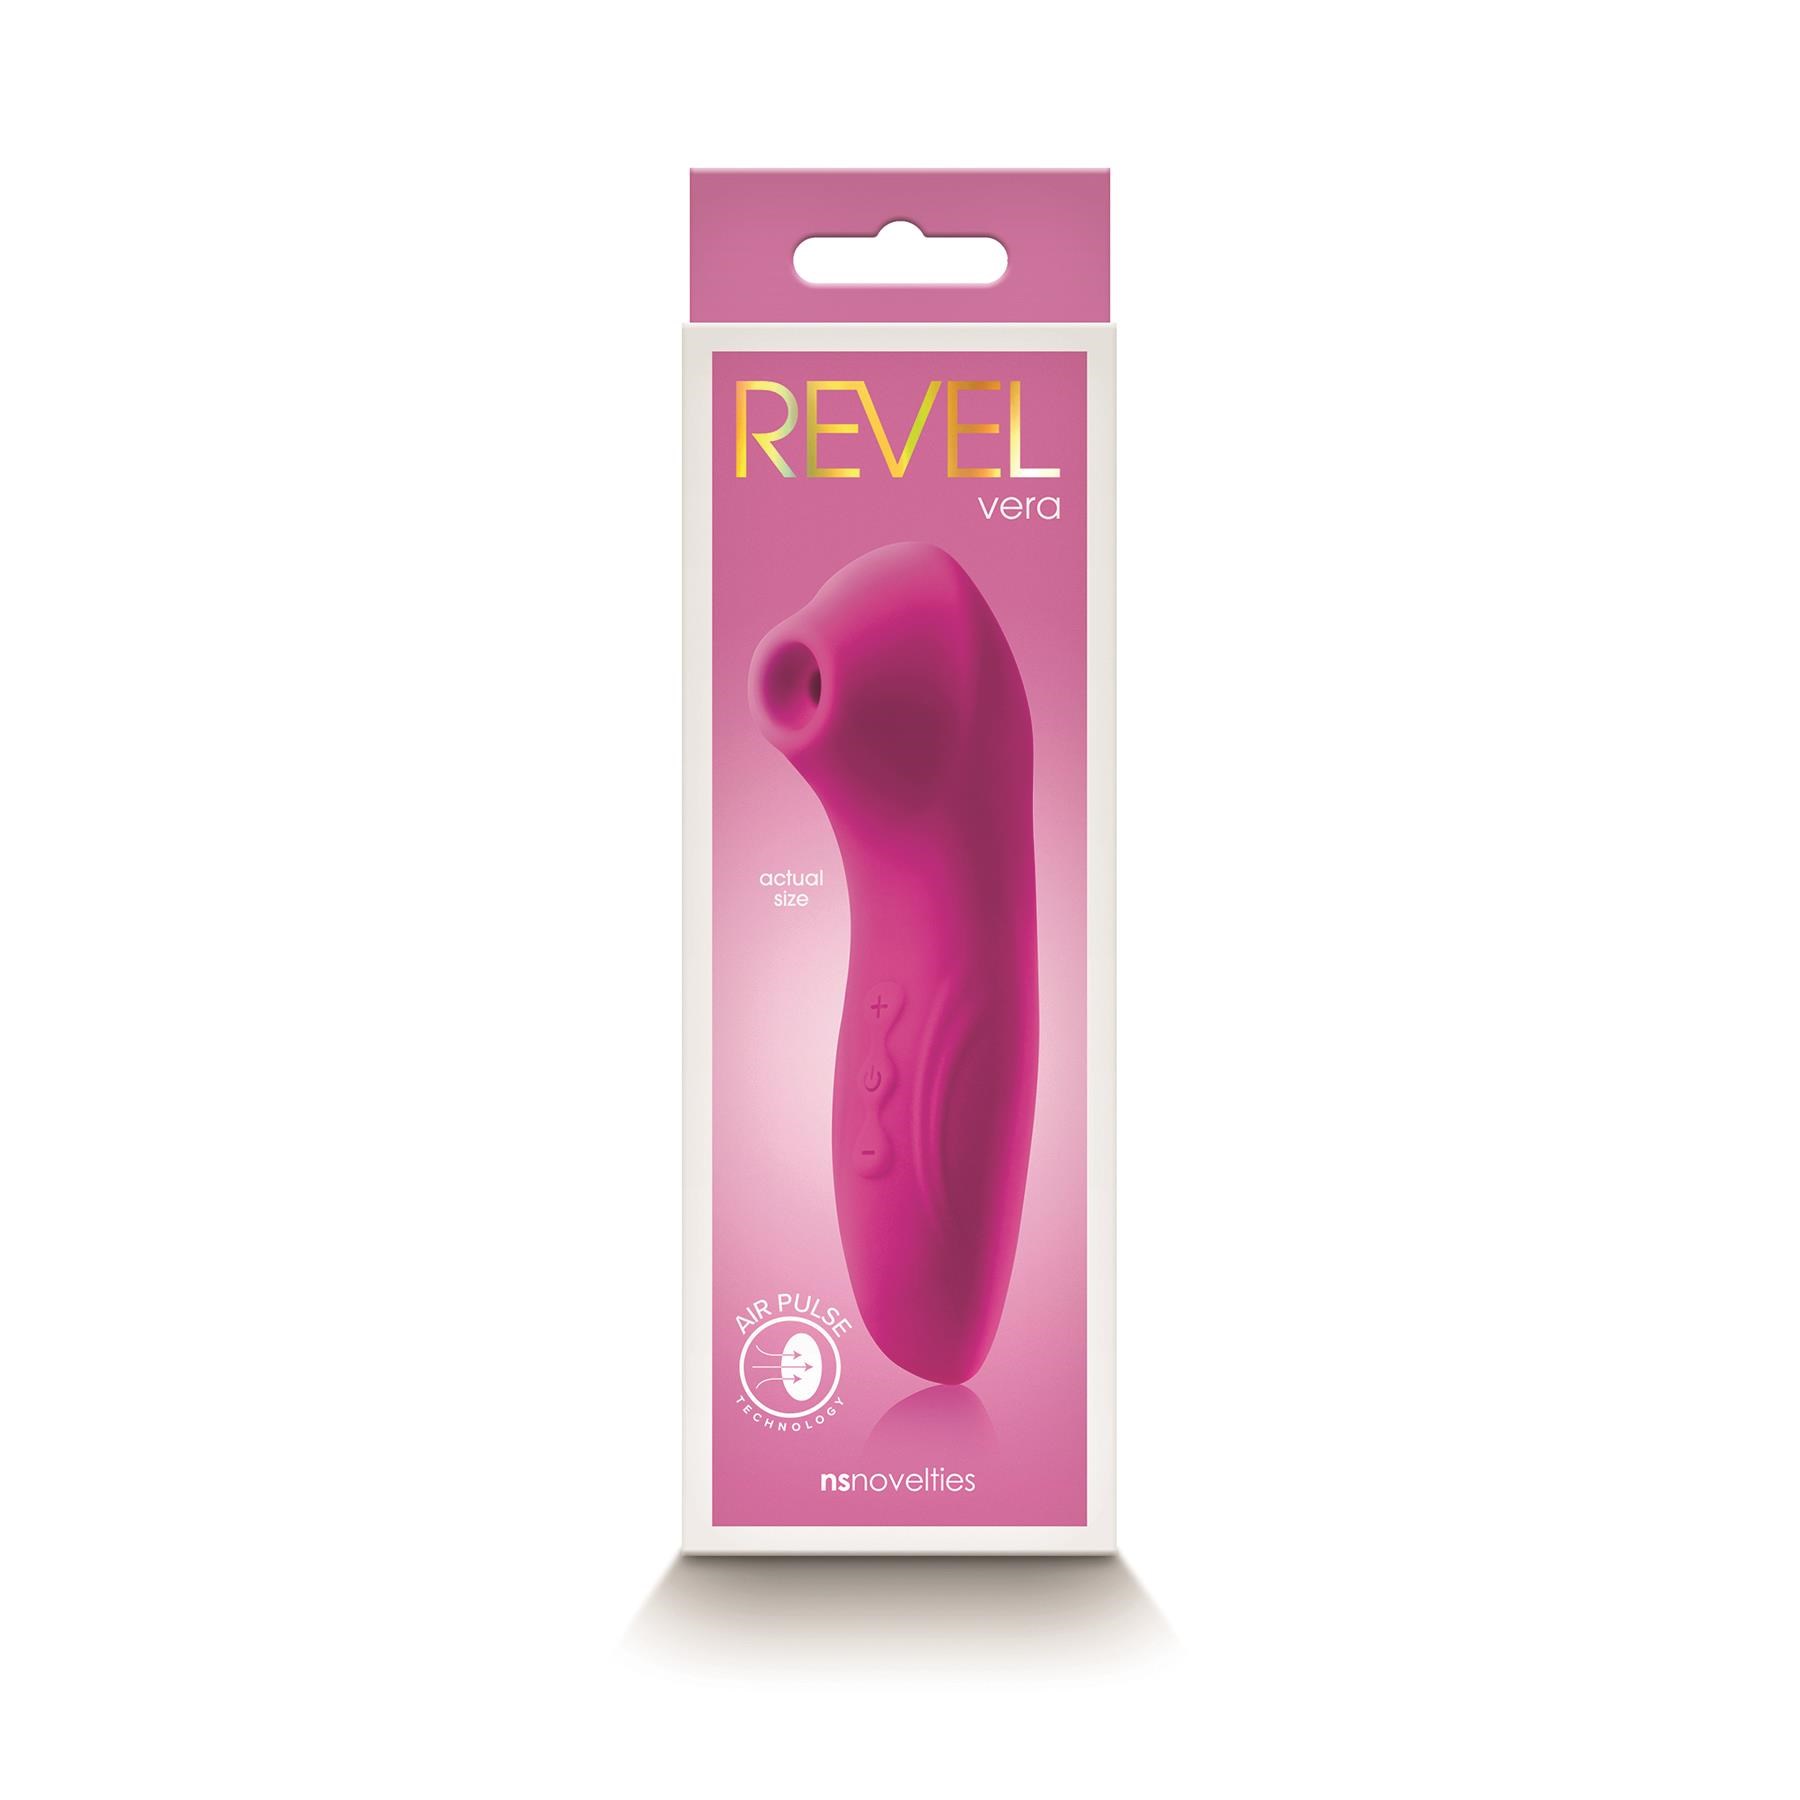 Revel Vera Clitoral Stimulator - Packaging Shot